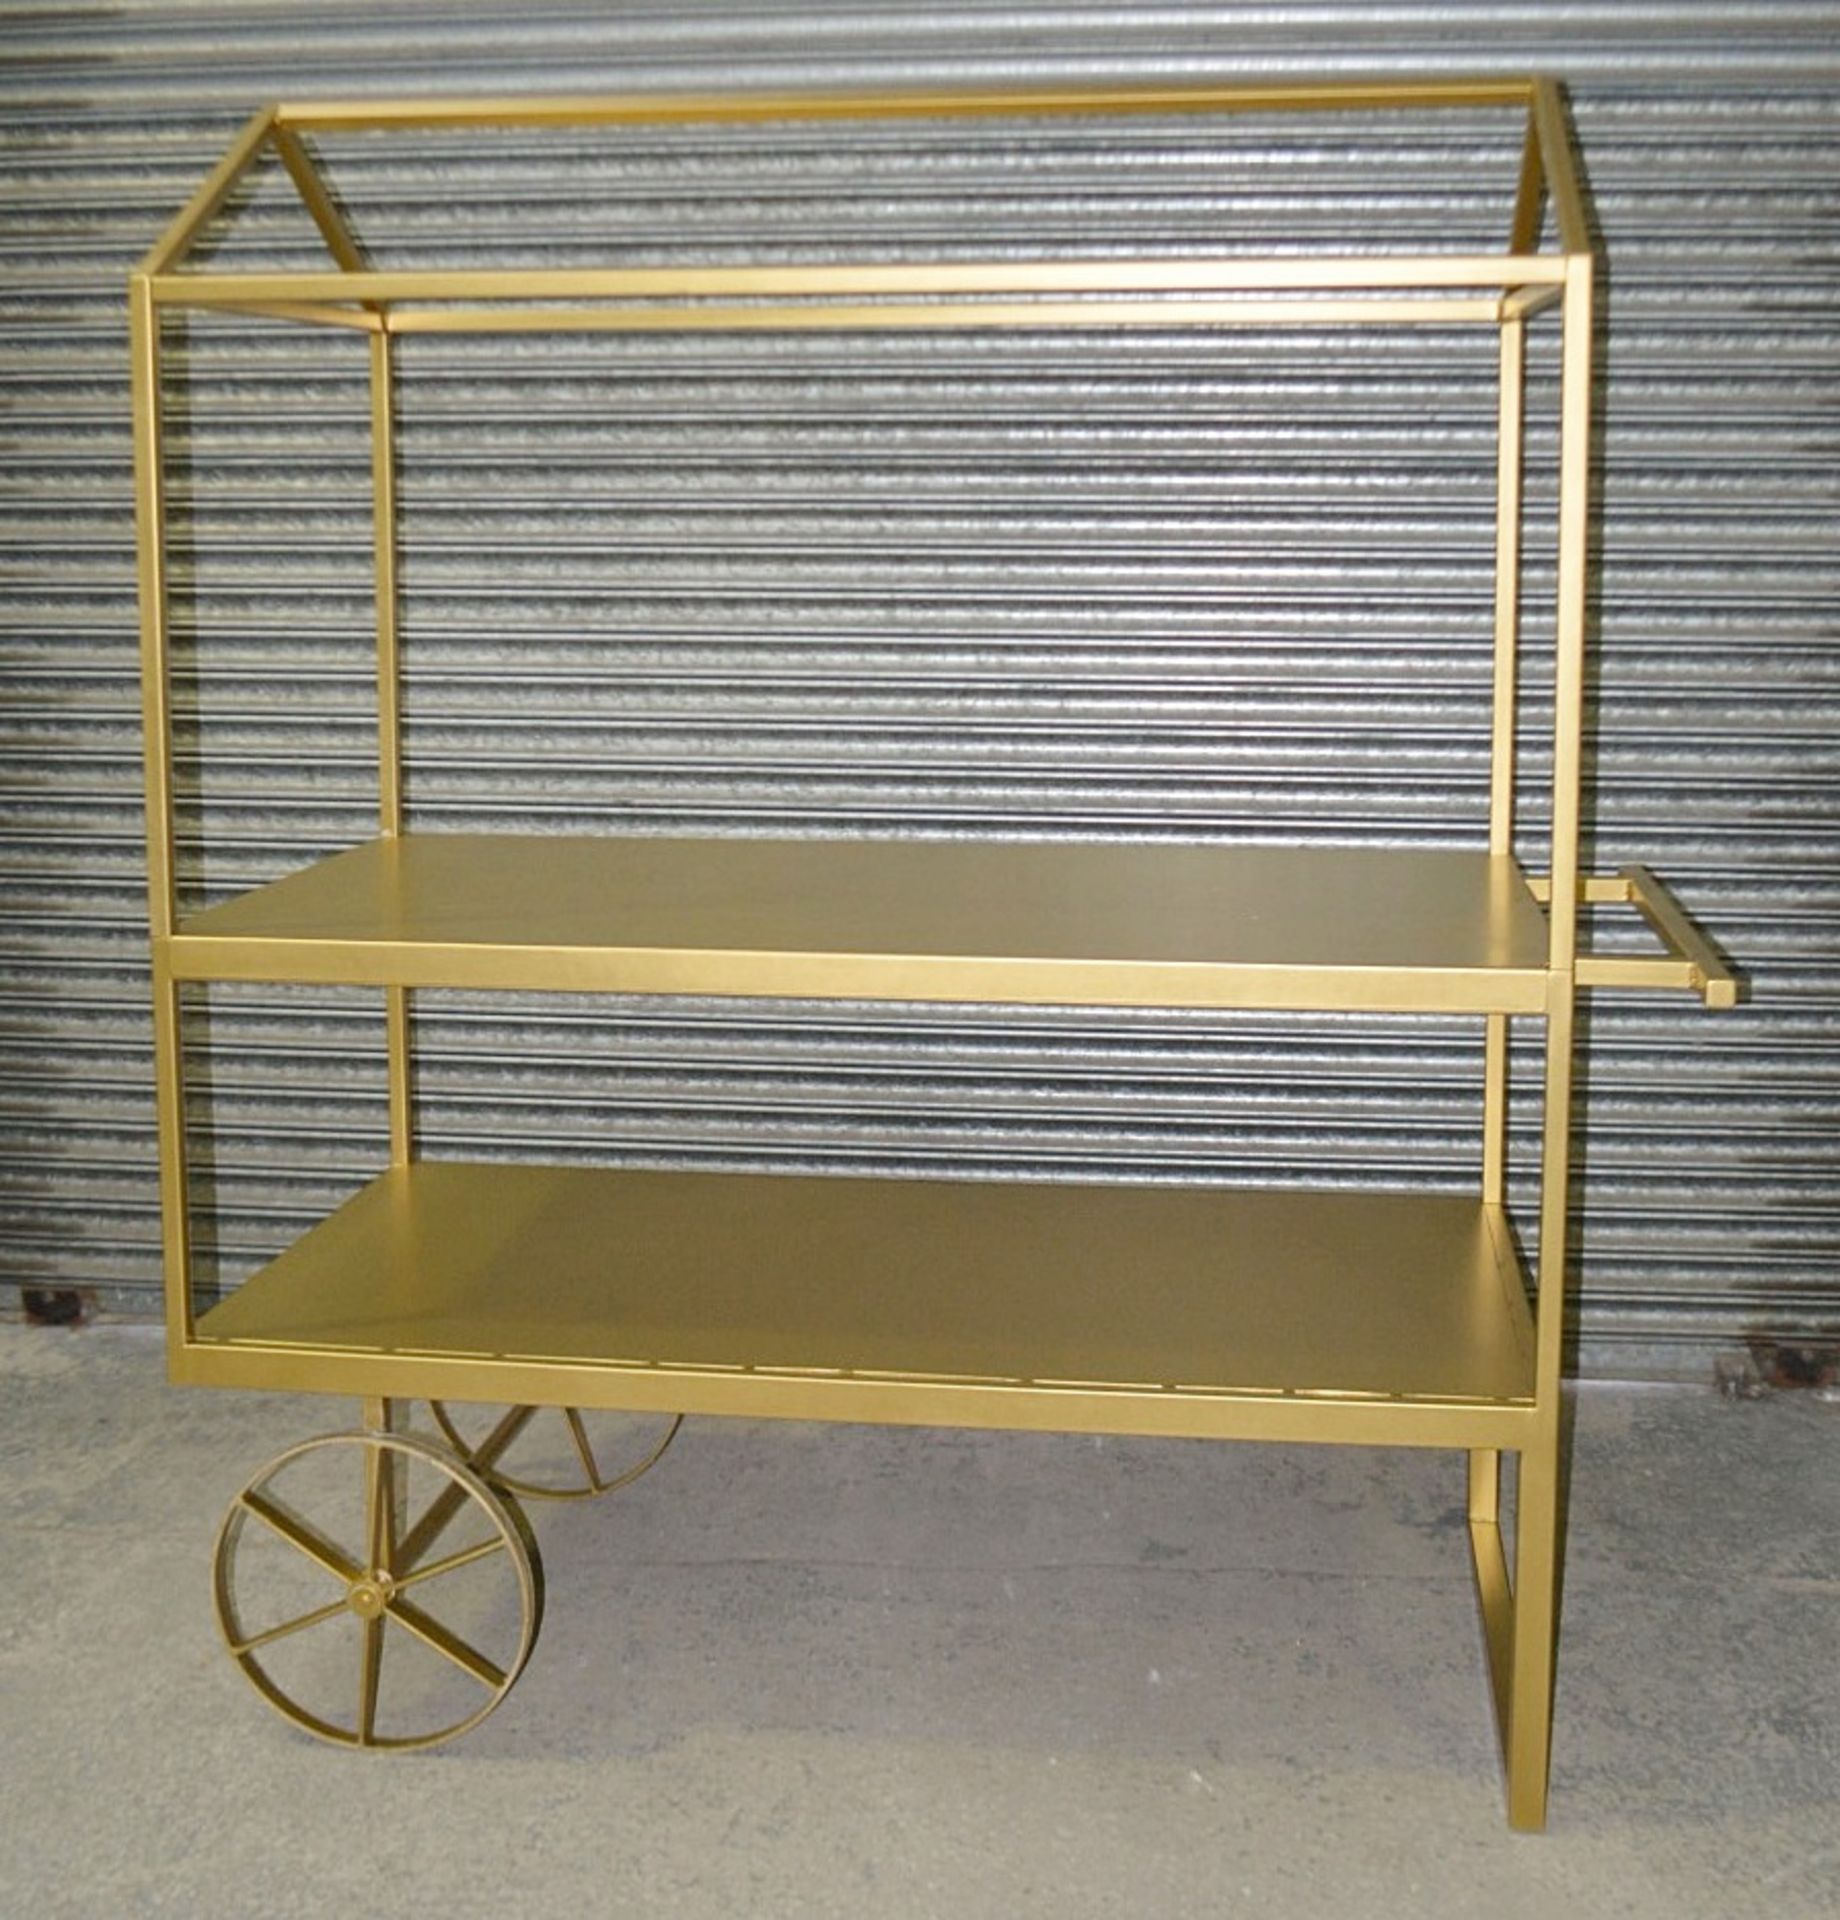 1 x Metal 2-Metre High Display Cart In Gold - Dimensions: H200 x W178 x D87cm - Ex-Showroom - Image 2 of 5